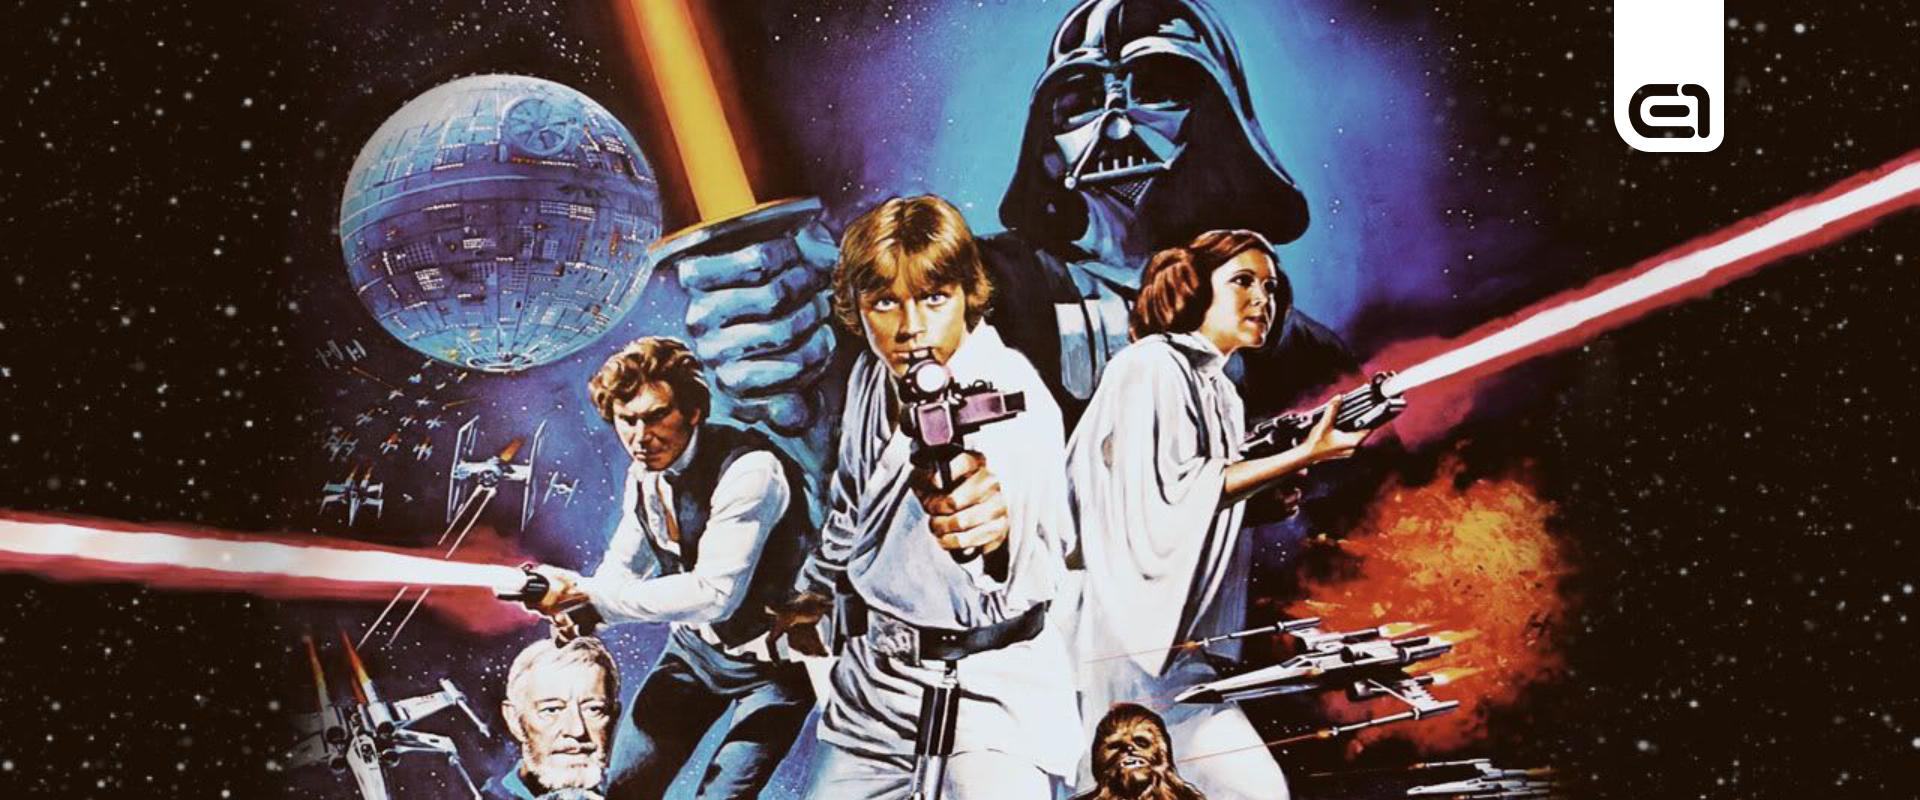 Star Wars: Egy darabka történelem 1977-ből